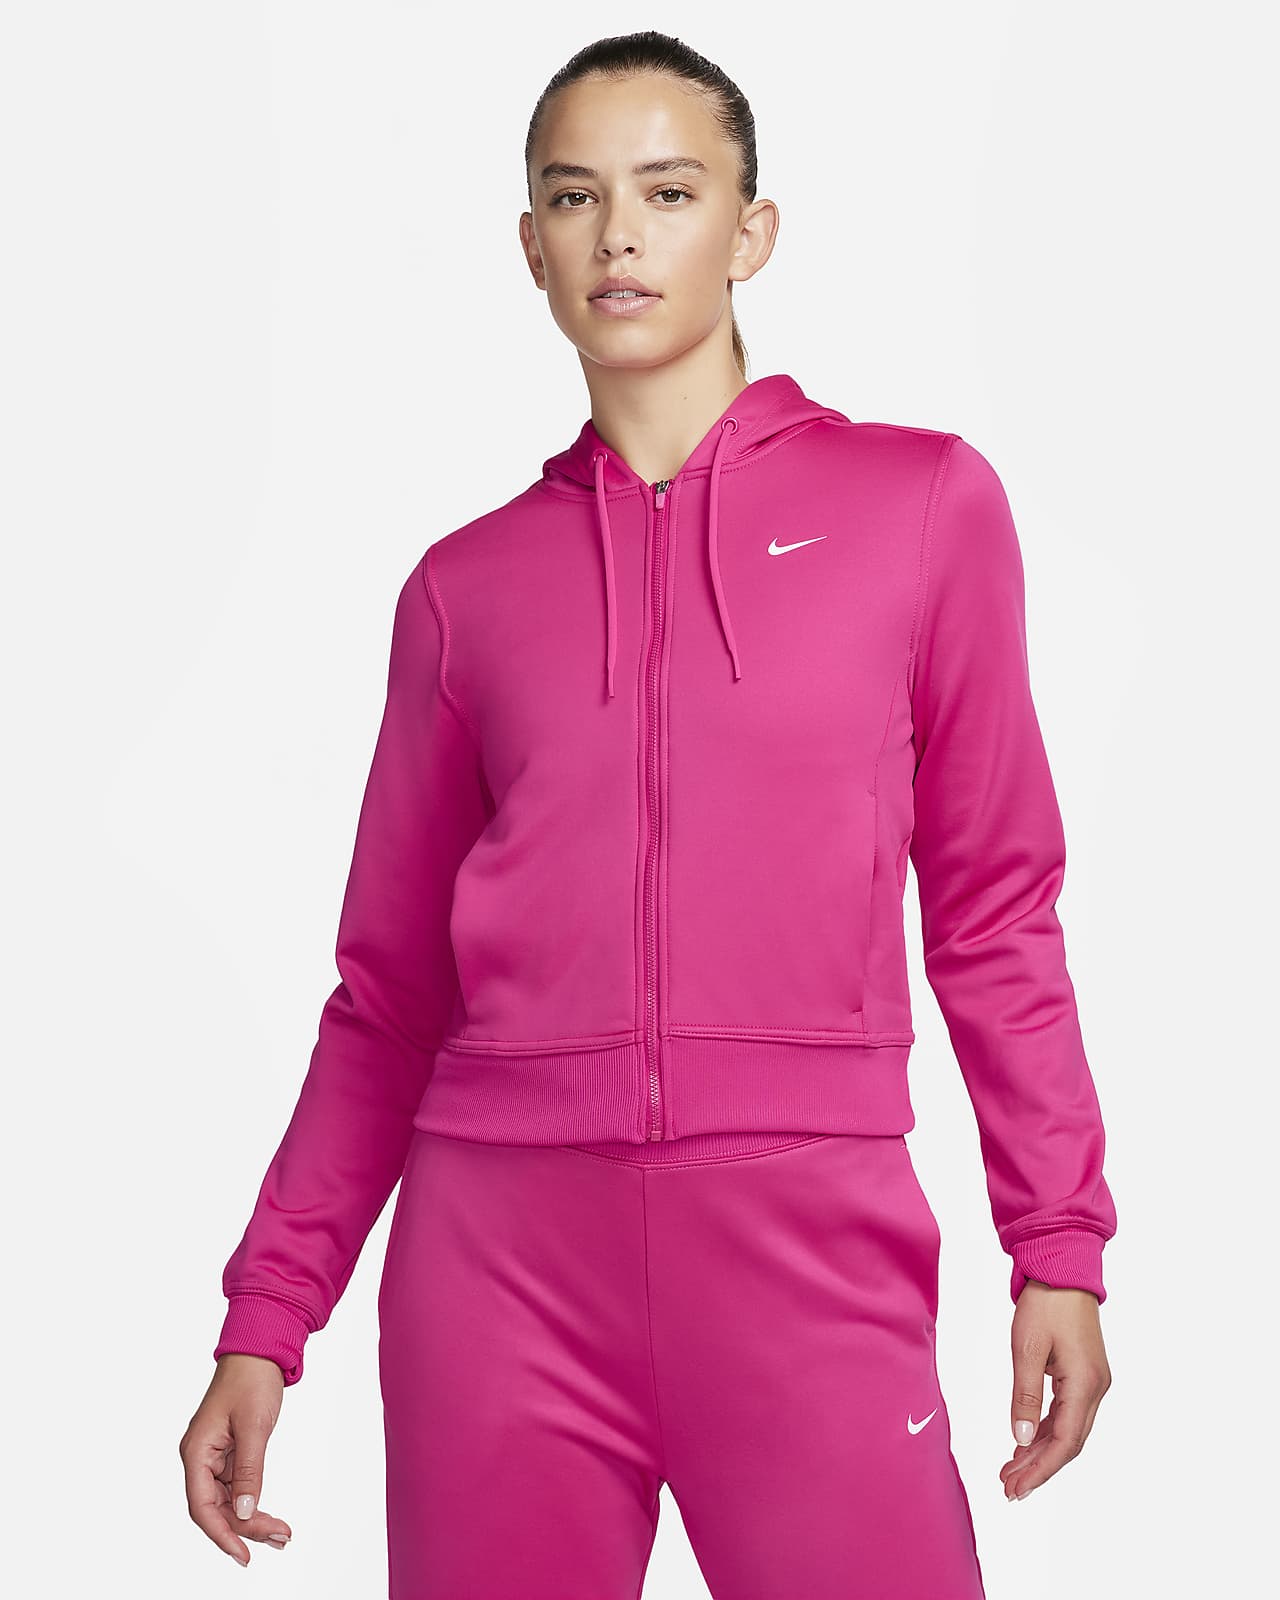 Nike Women's Therma-FIT One Full-Zip Hoodie, Medium, Fireberry